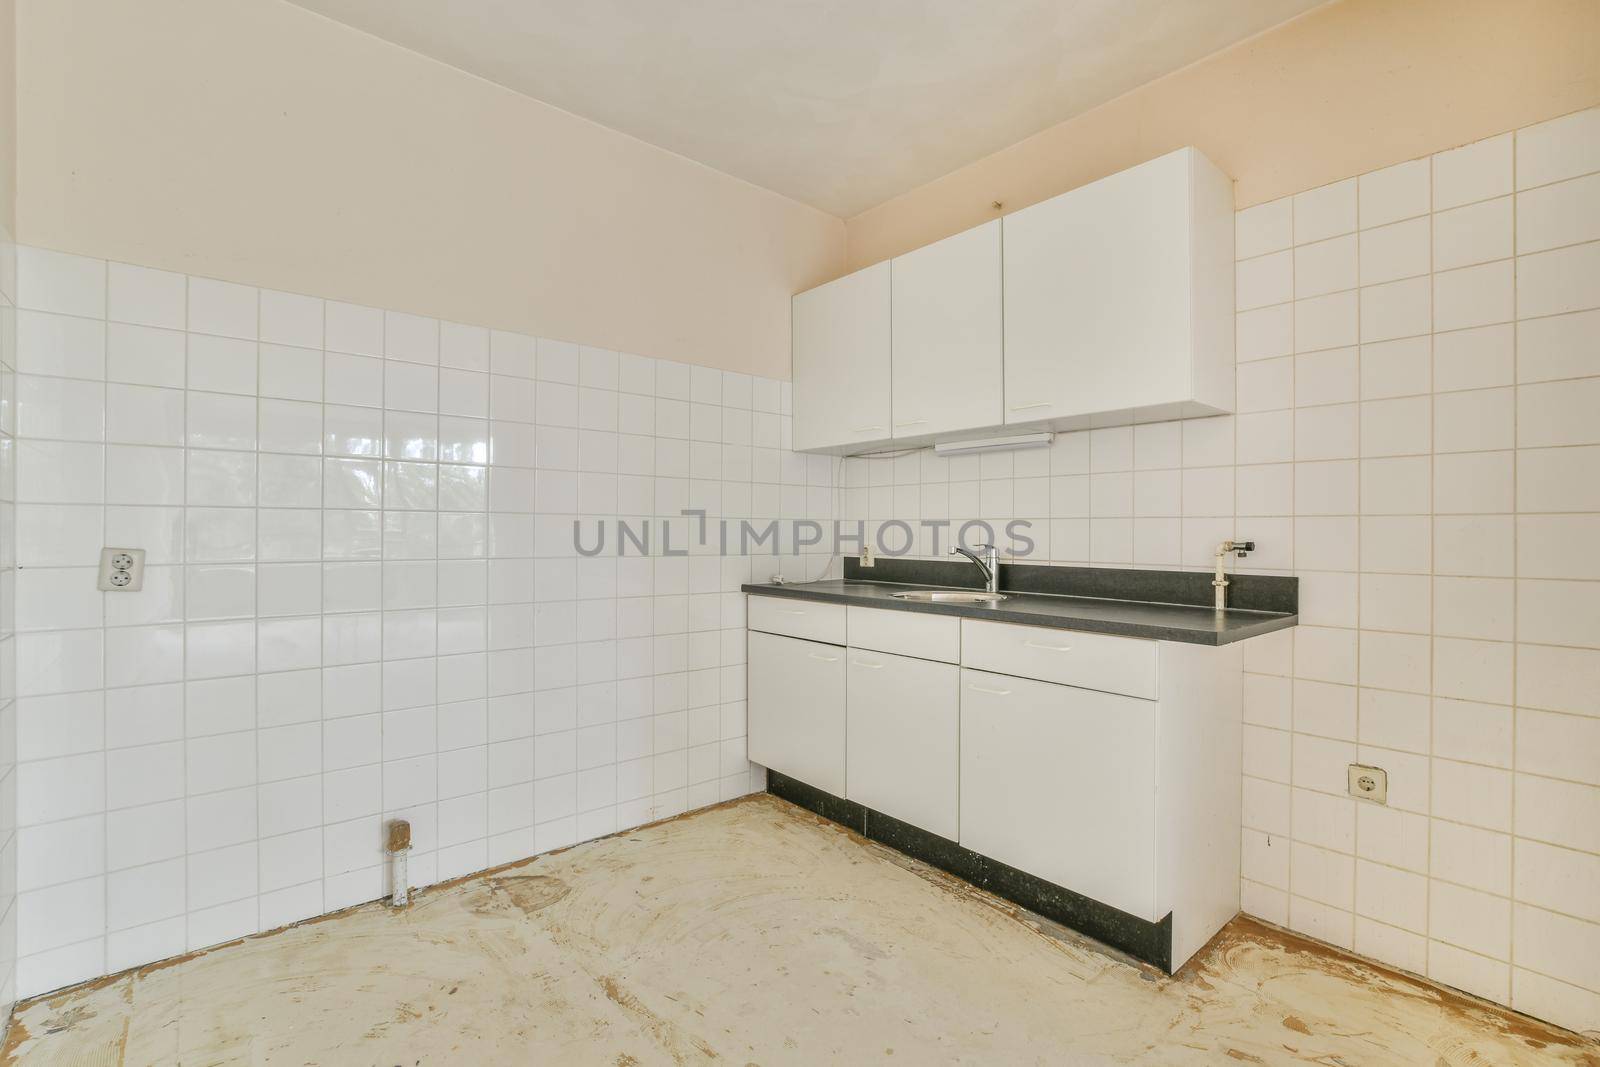 Miniature kitchen with black worktop in an elegant apartment